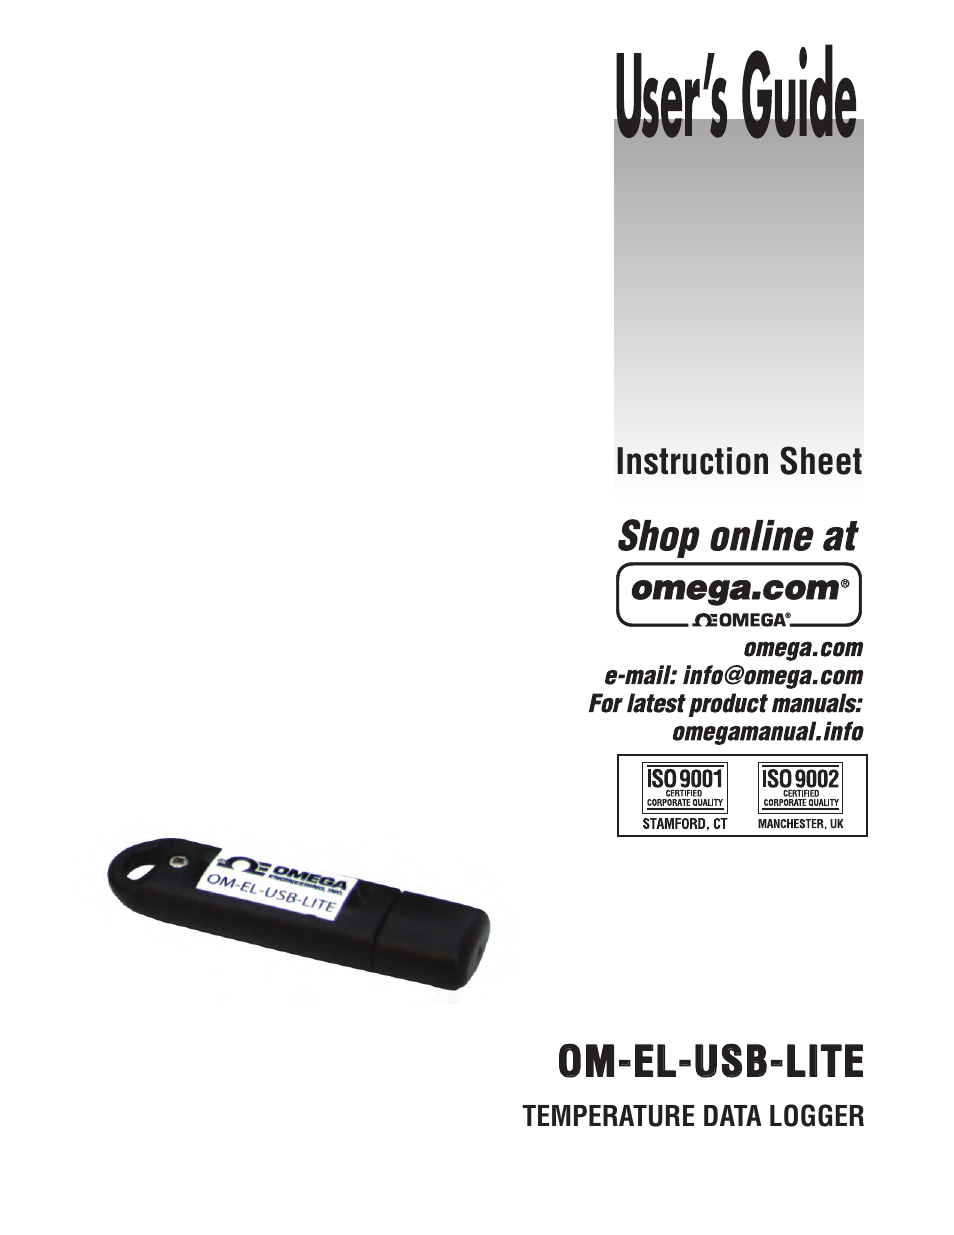 OM-EL-USB-LITE